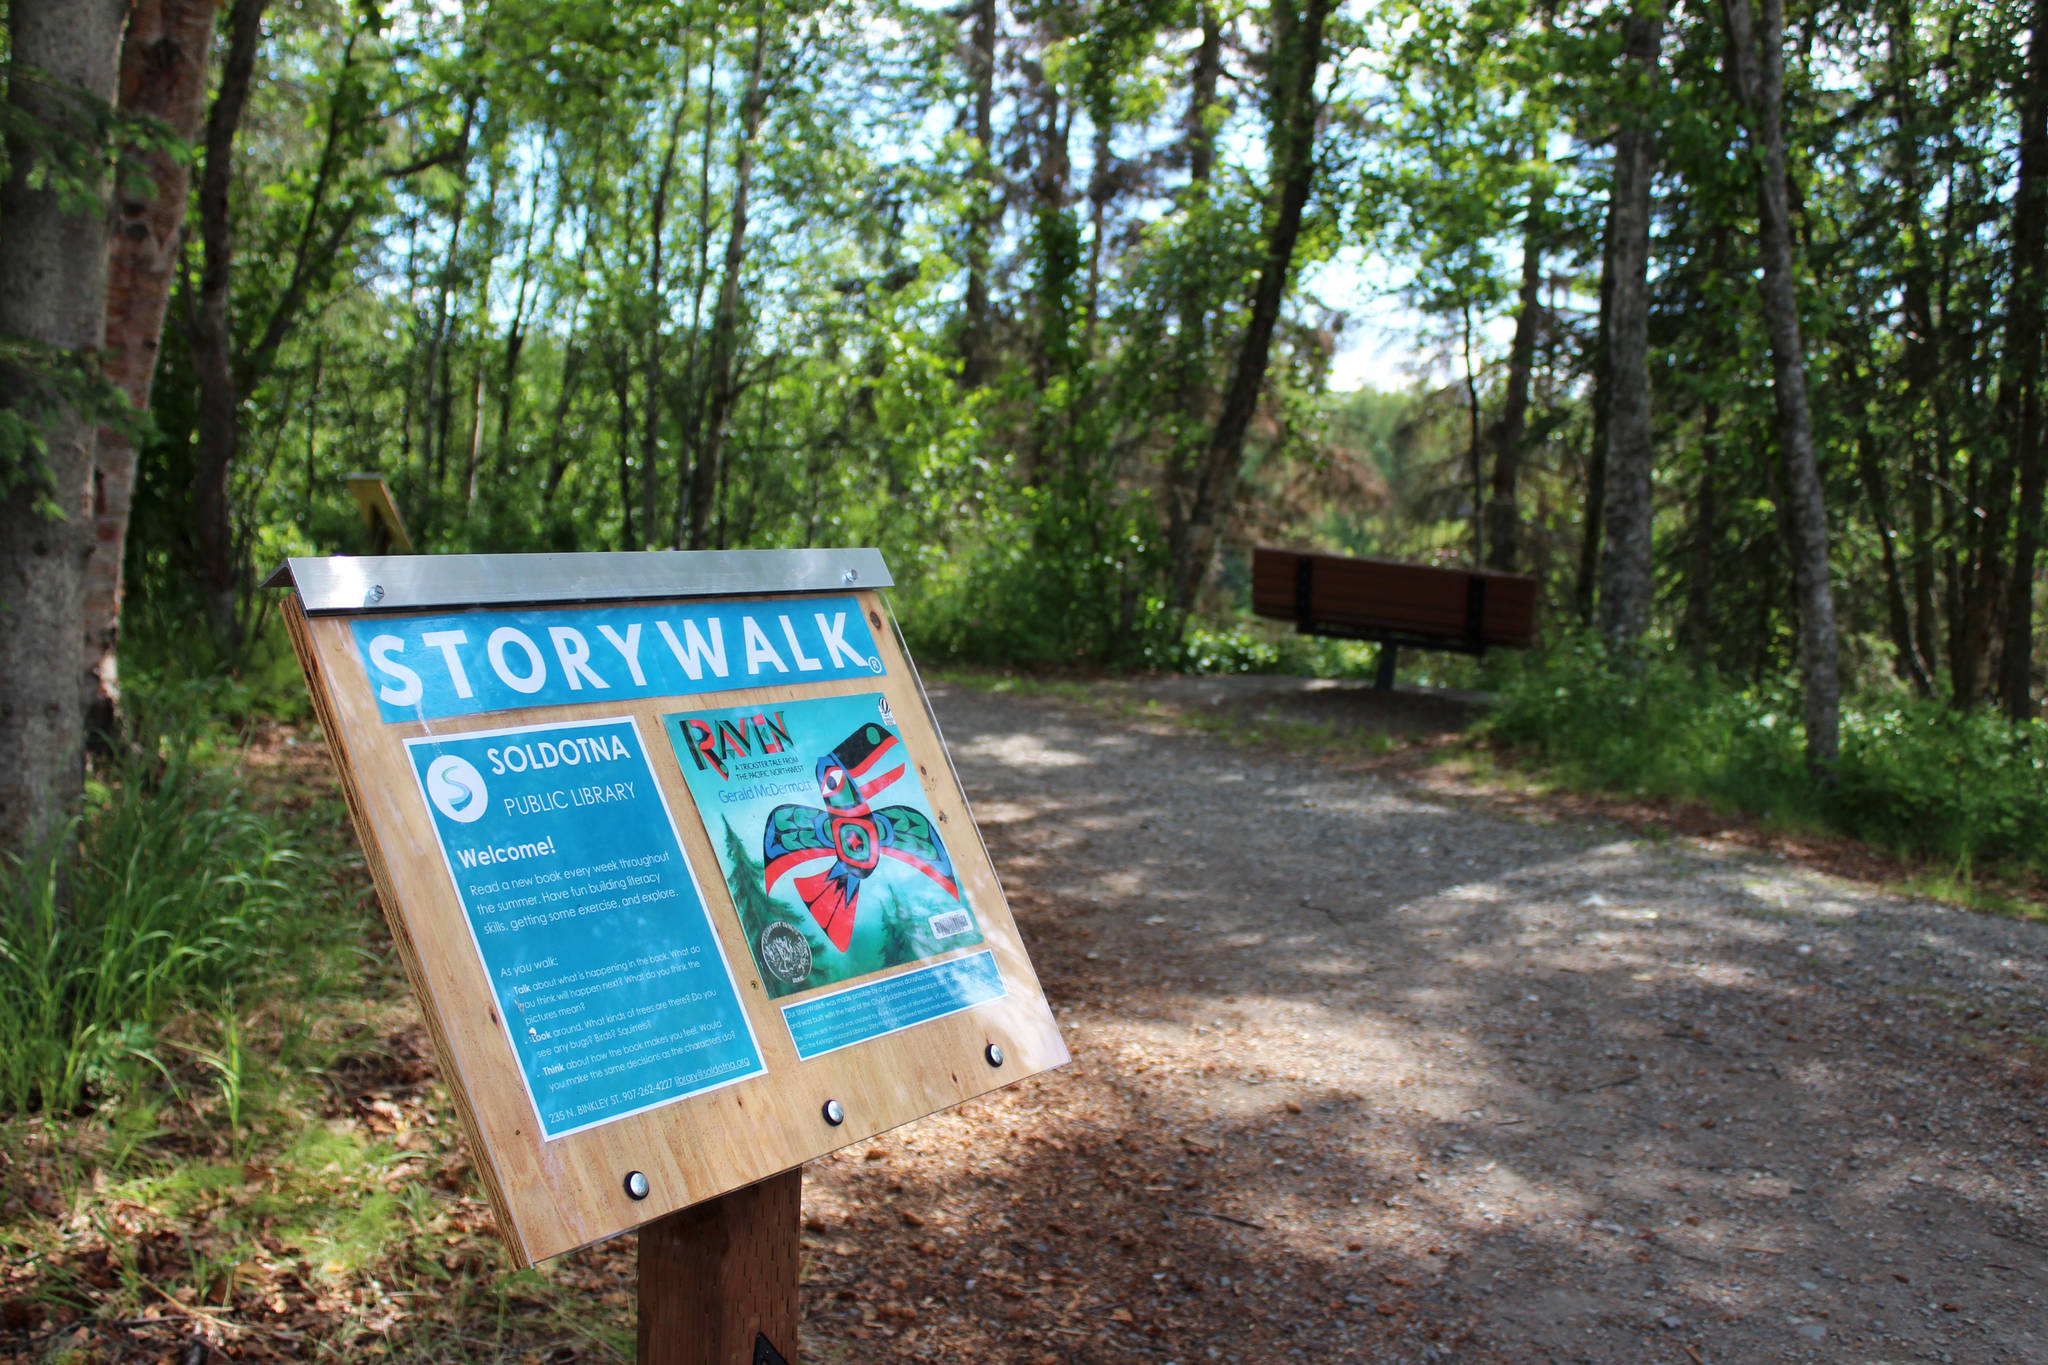 A podium marks the beginning of a StoryWalk at Soldotna Creek Park on Tuesday, June 29, 2021 in Soldotna, Alaska. (Ashlyn O’Hara/Peninsula Clarion)